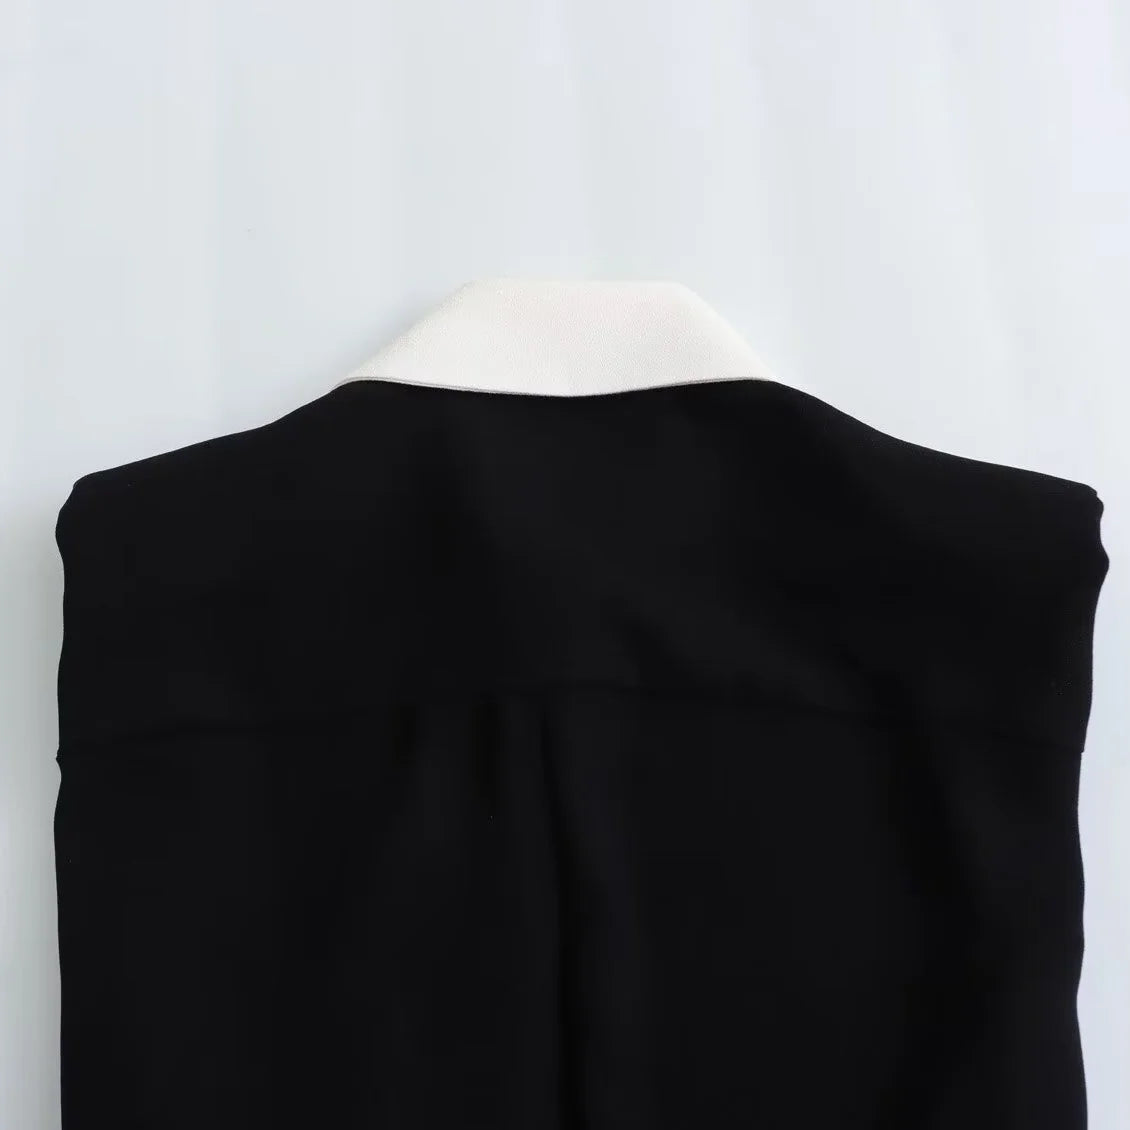 Sleeveless Collared Black & White Dress